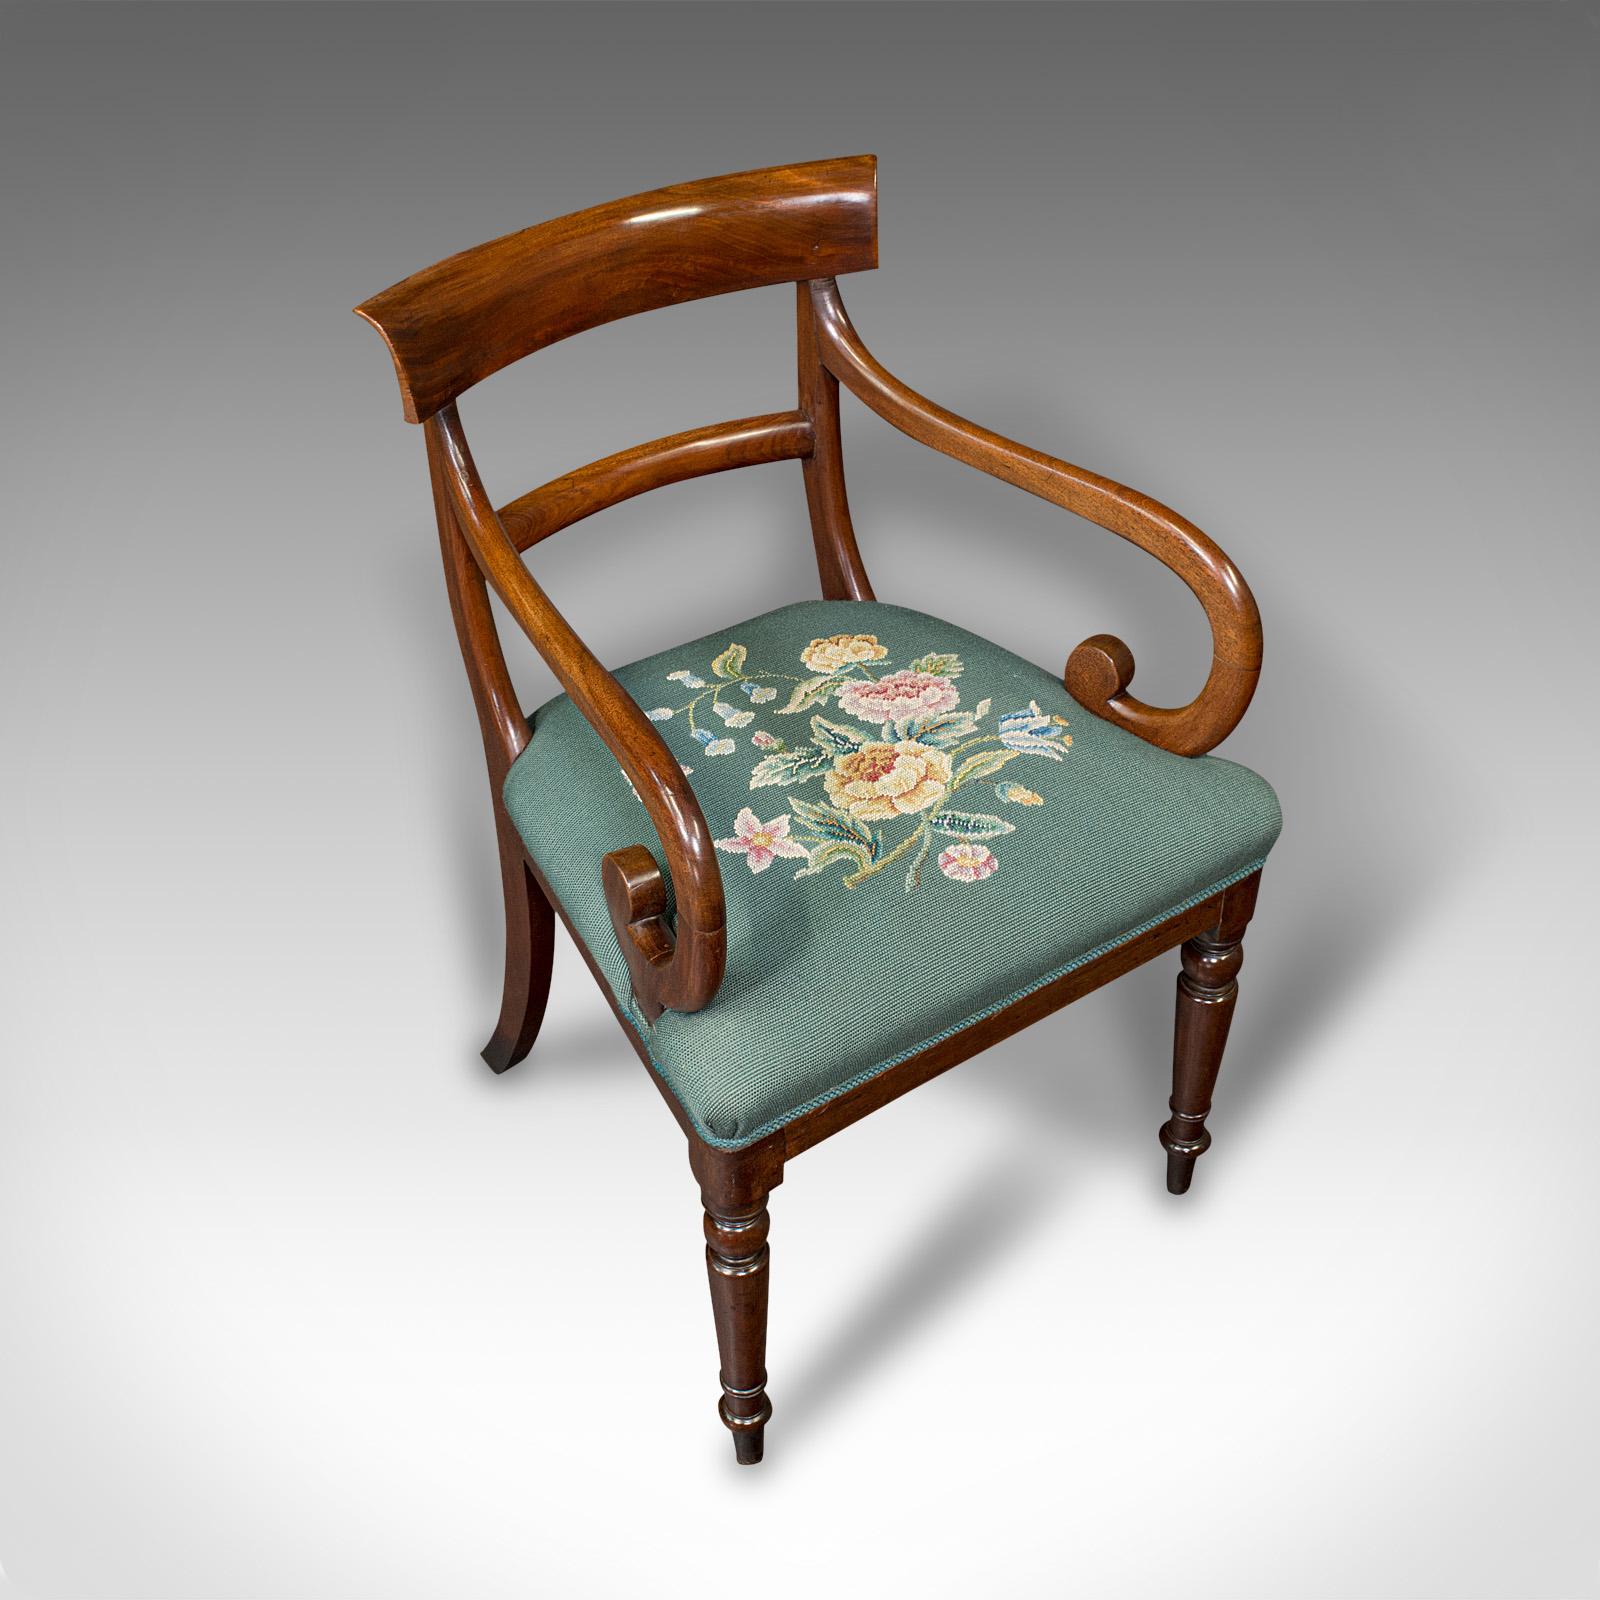 Wood Antique Scroll Arm Desk Chair, English, Armchair, Needlepoint, Regency, C.1820